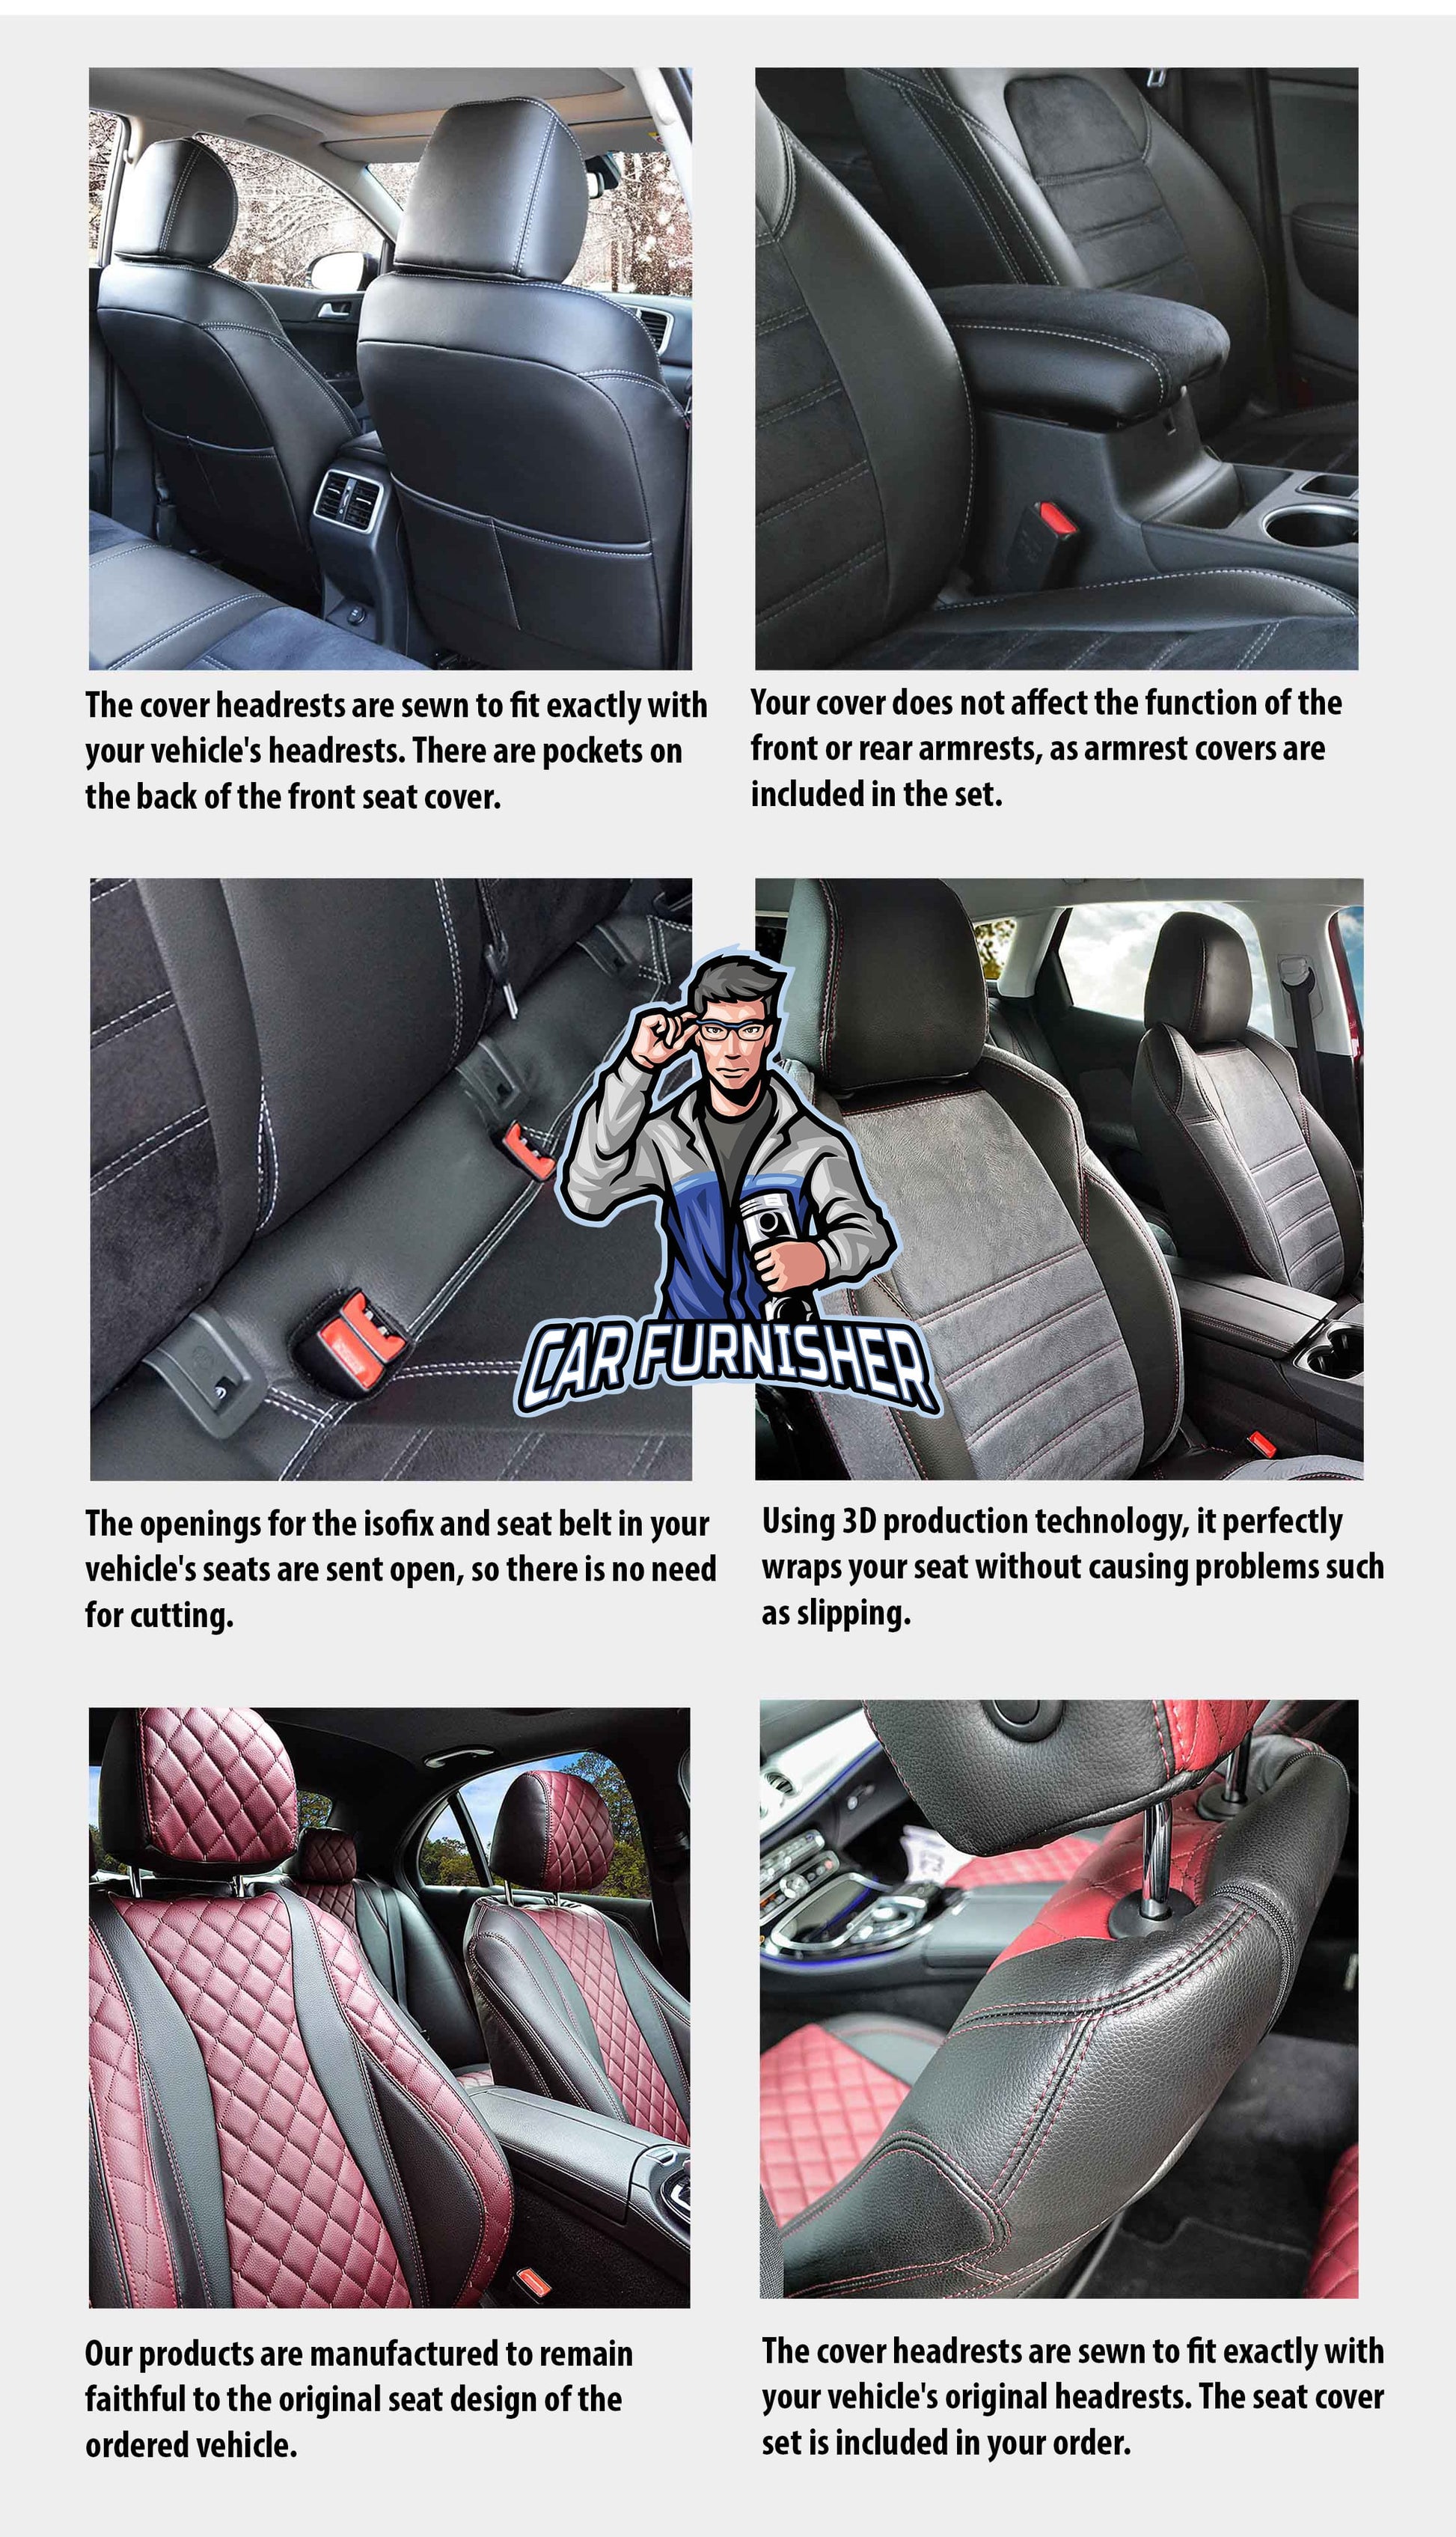 Volkswagen Bora Seat Cover Madrid Leather Design Beige Leather